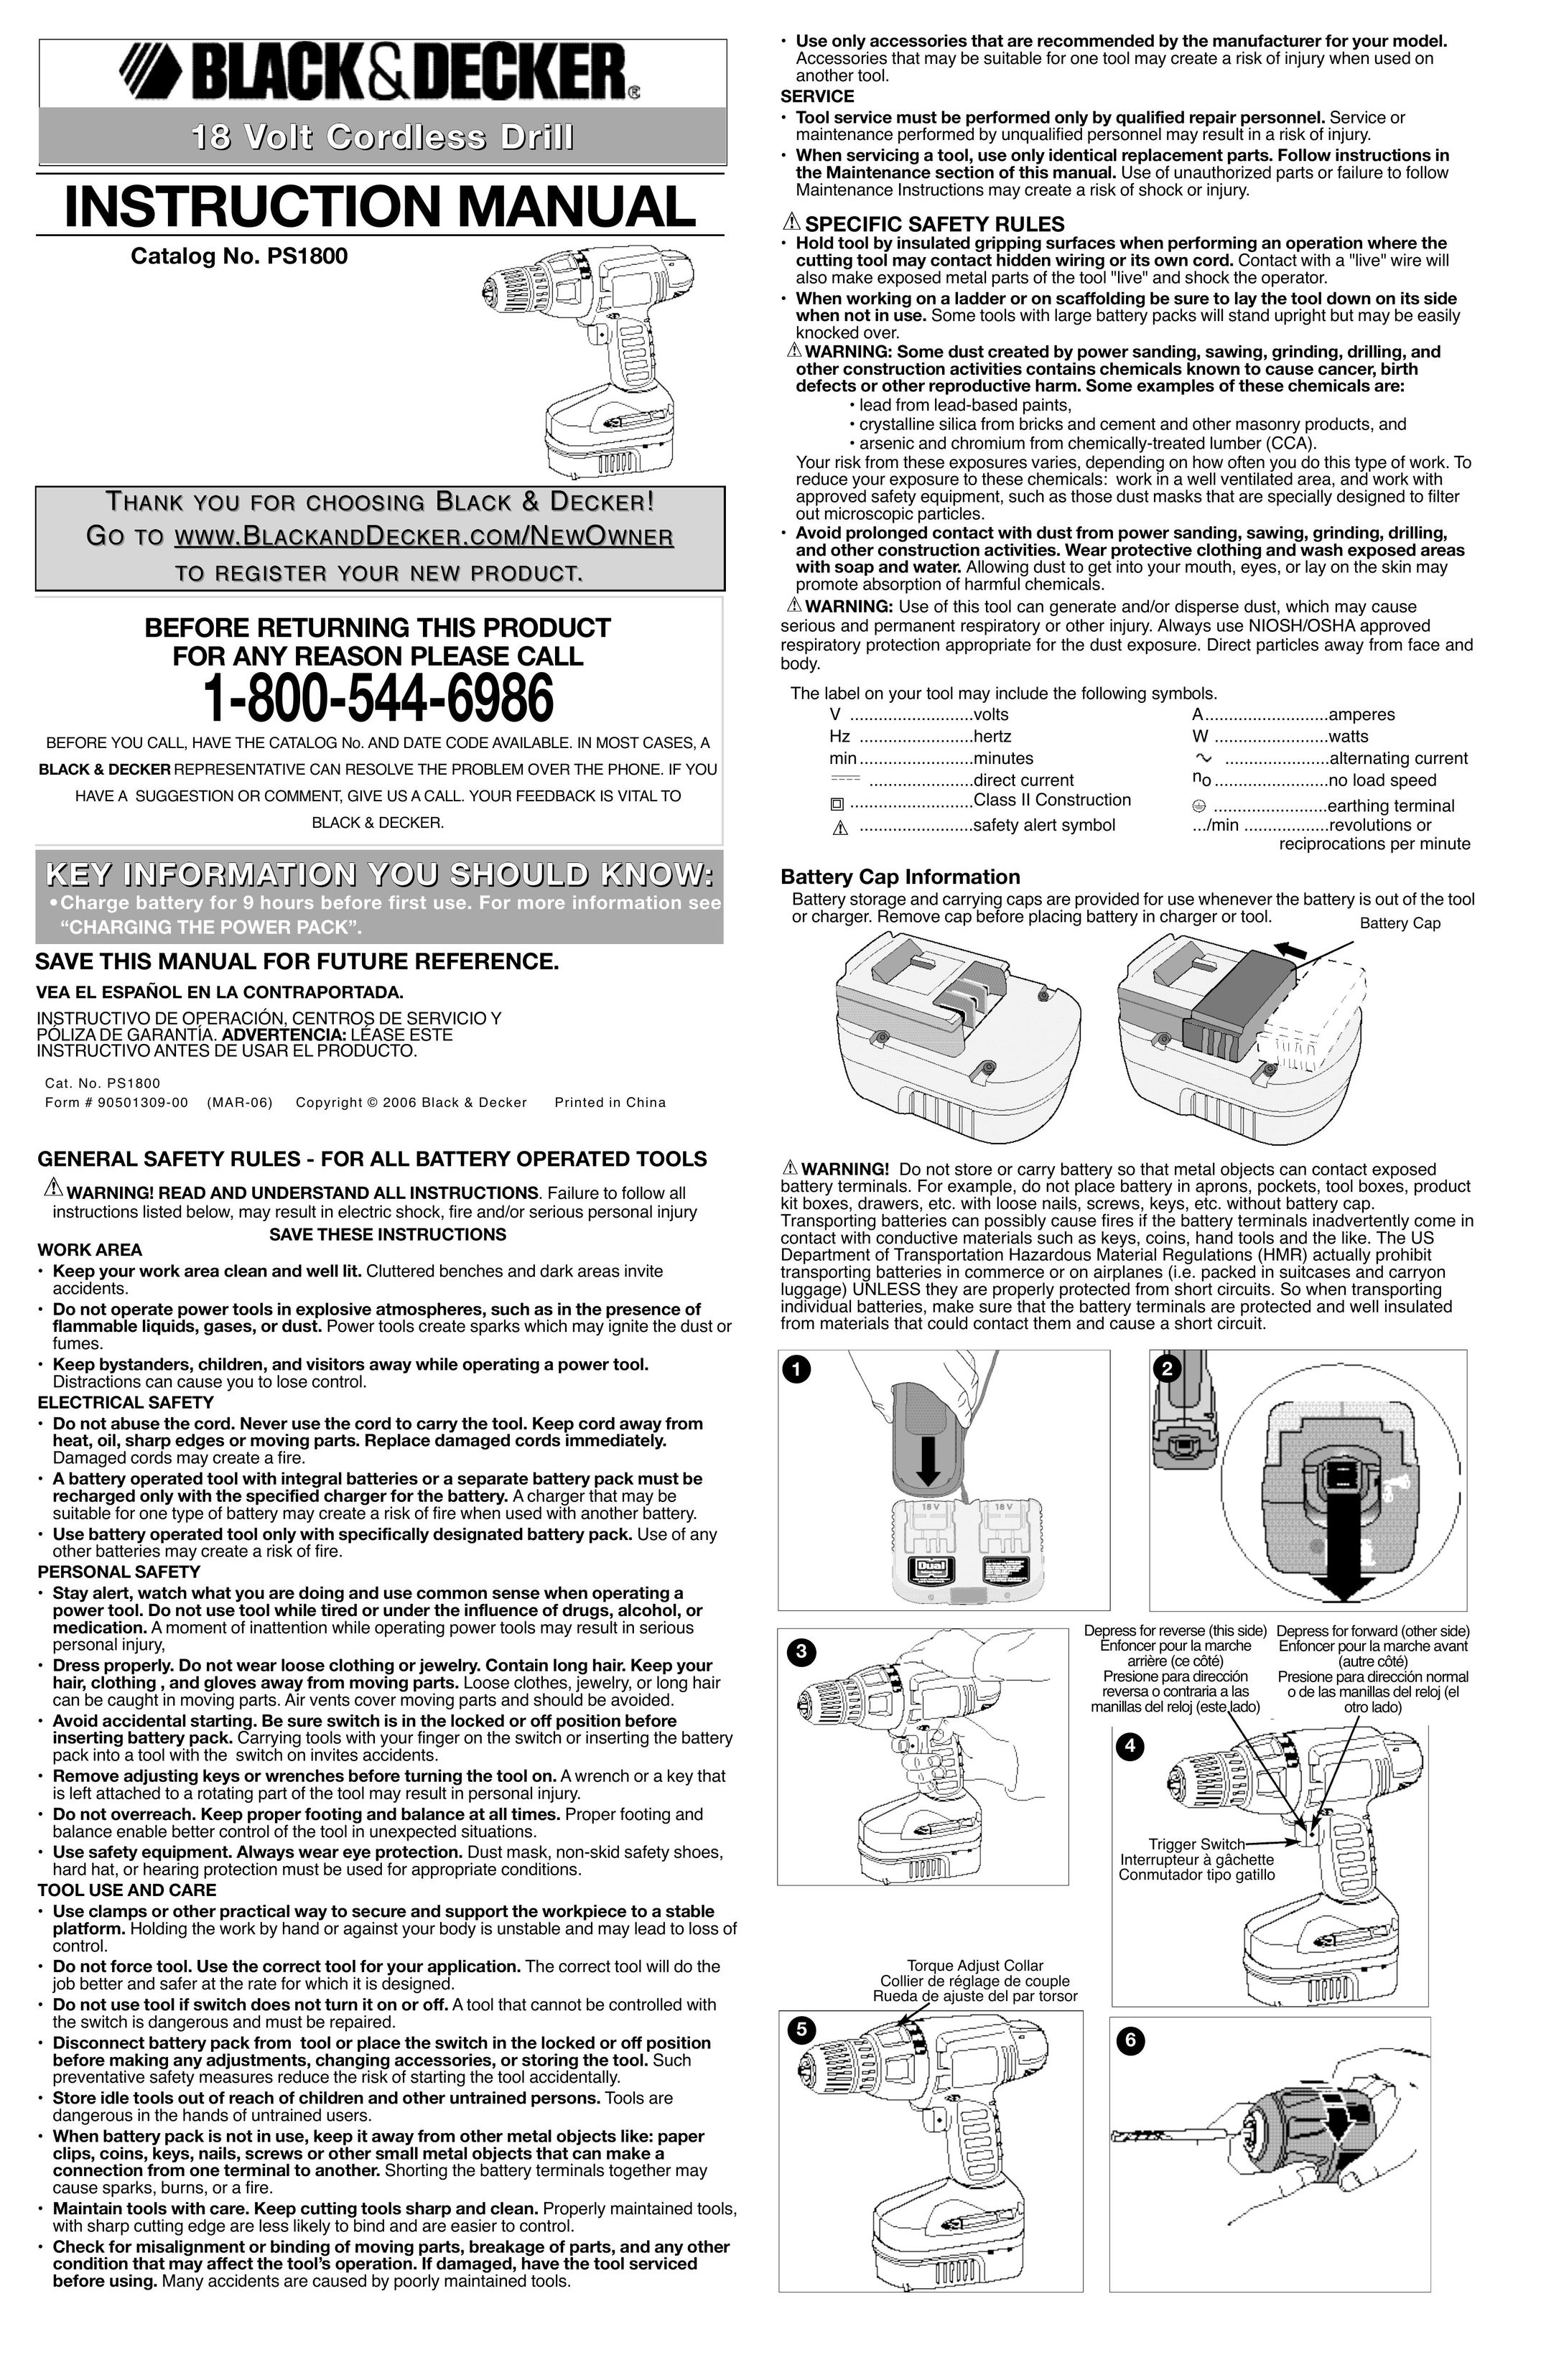 Black & Decker 90501309-00 Cordless Drill User Manual